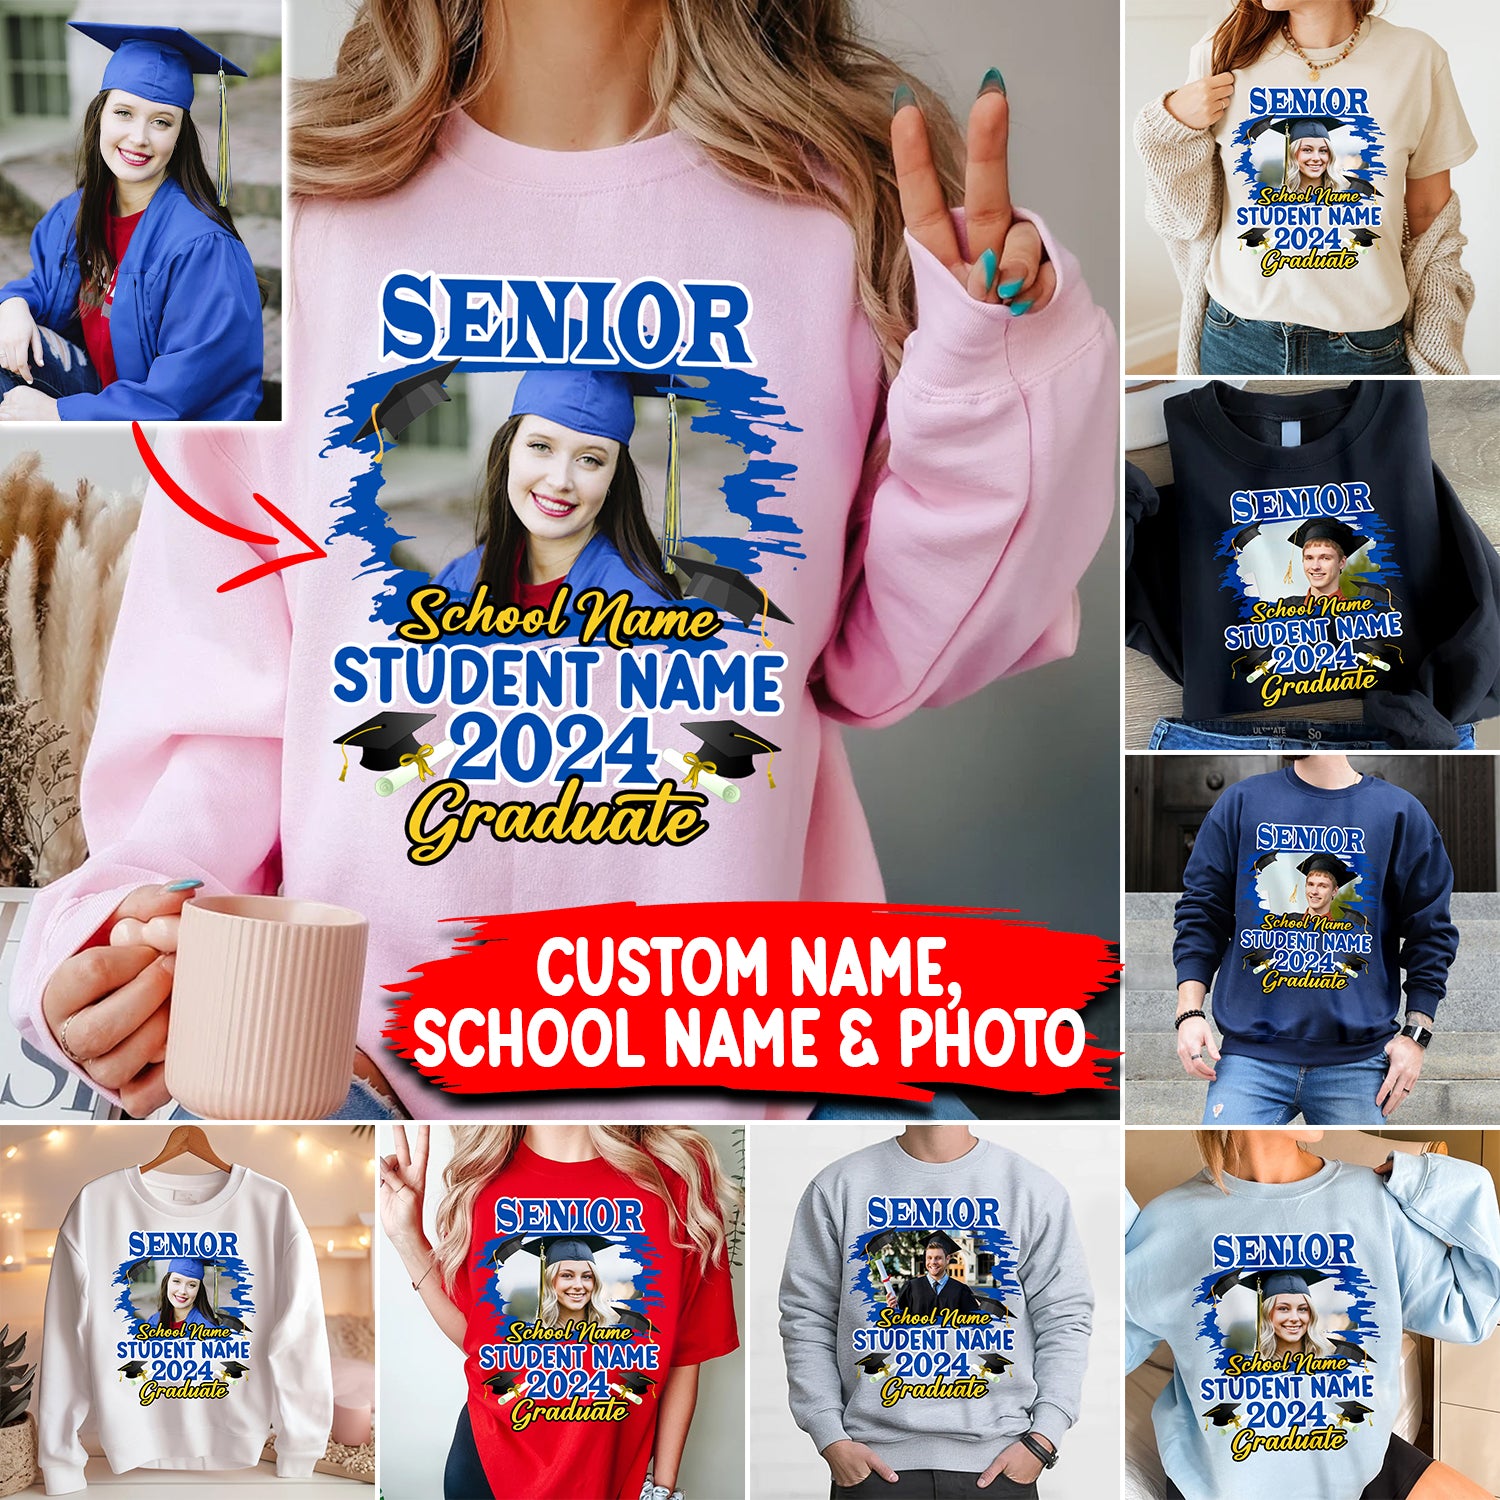 Congrats Senior Graduate 2024 - Custom Photo And Texts Graduation Gift - Personalized Light Sweatshirt